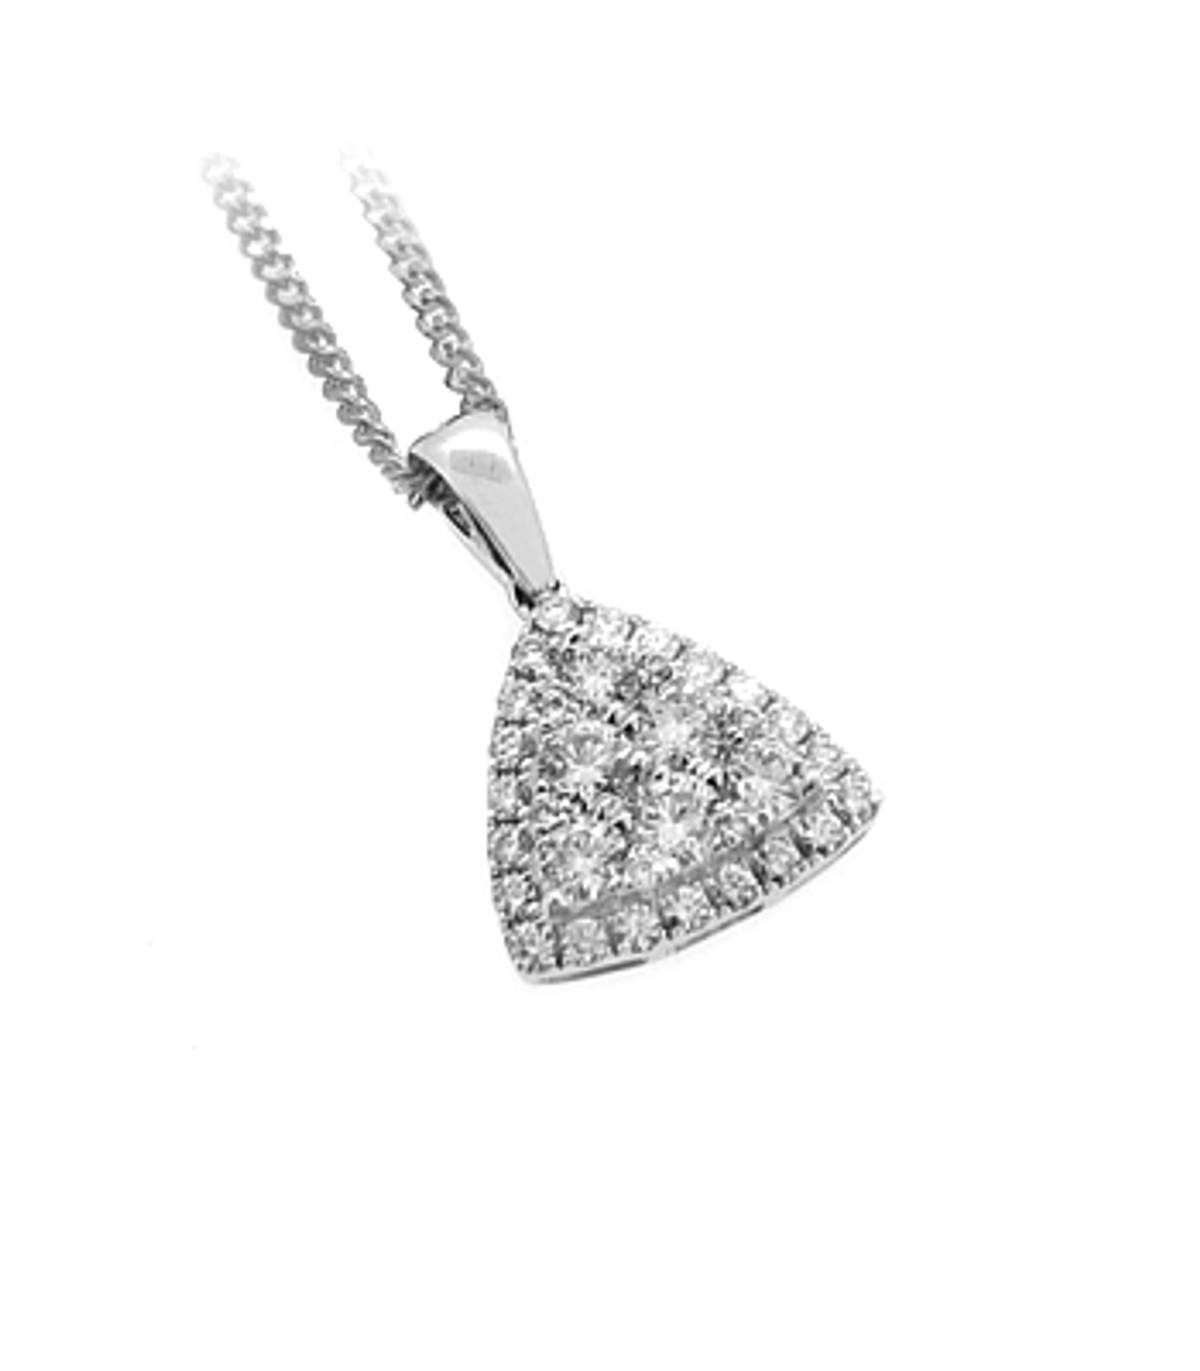 18k white gold brilliant cut diamond cluster pendant on 18k white gold 18” chain
DETAILS
Carat: total diamond weight 0.62cts
Pendant length 1.6cm Pendant width 1.2cm